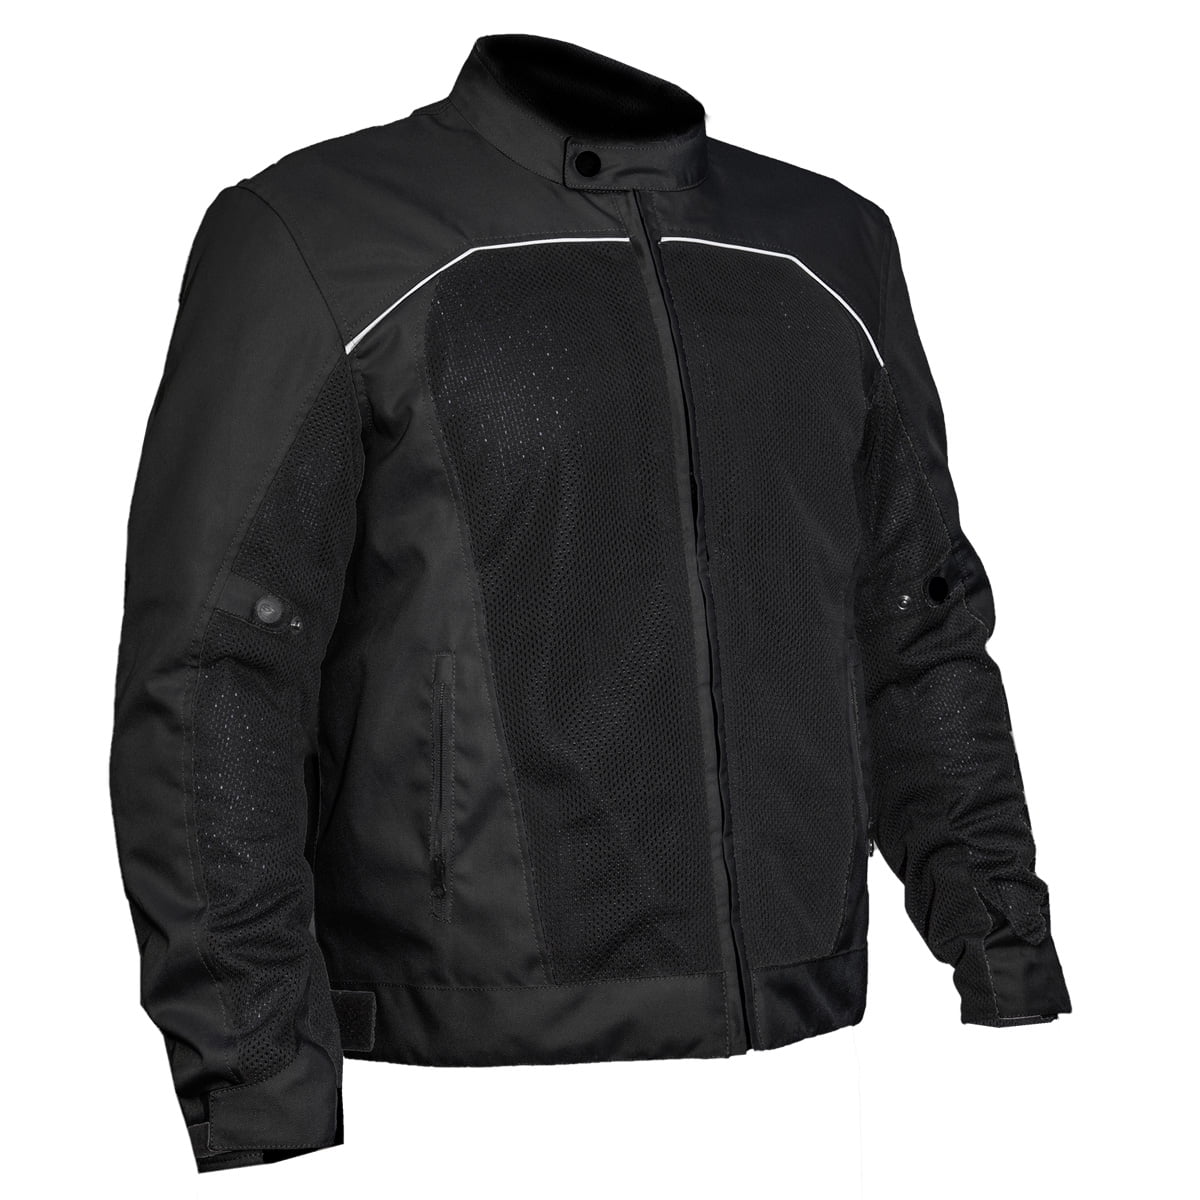 Men's Biker Boda Skin Leather Genuine Leather Jacket | Leather jacket  black, Fitted biker jacket, Real leather jacket